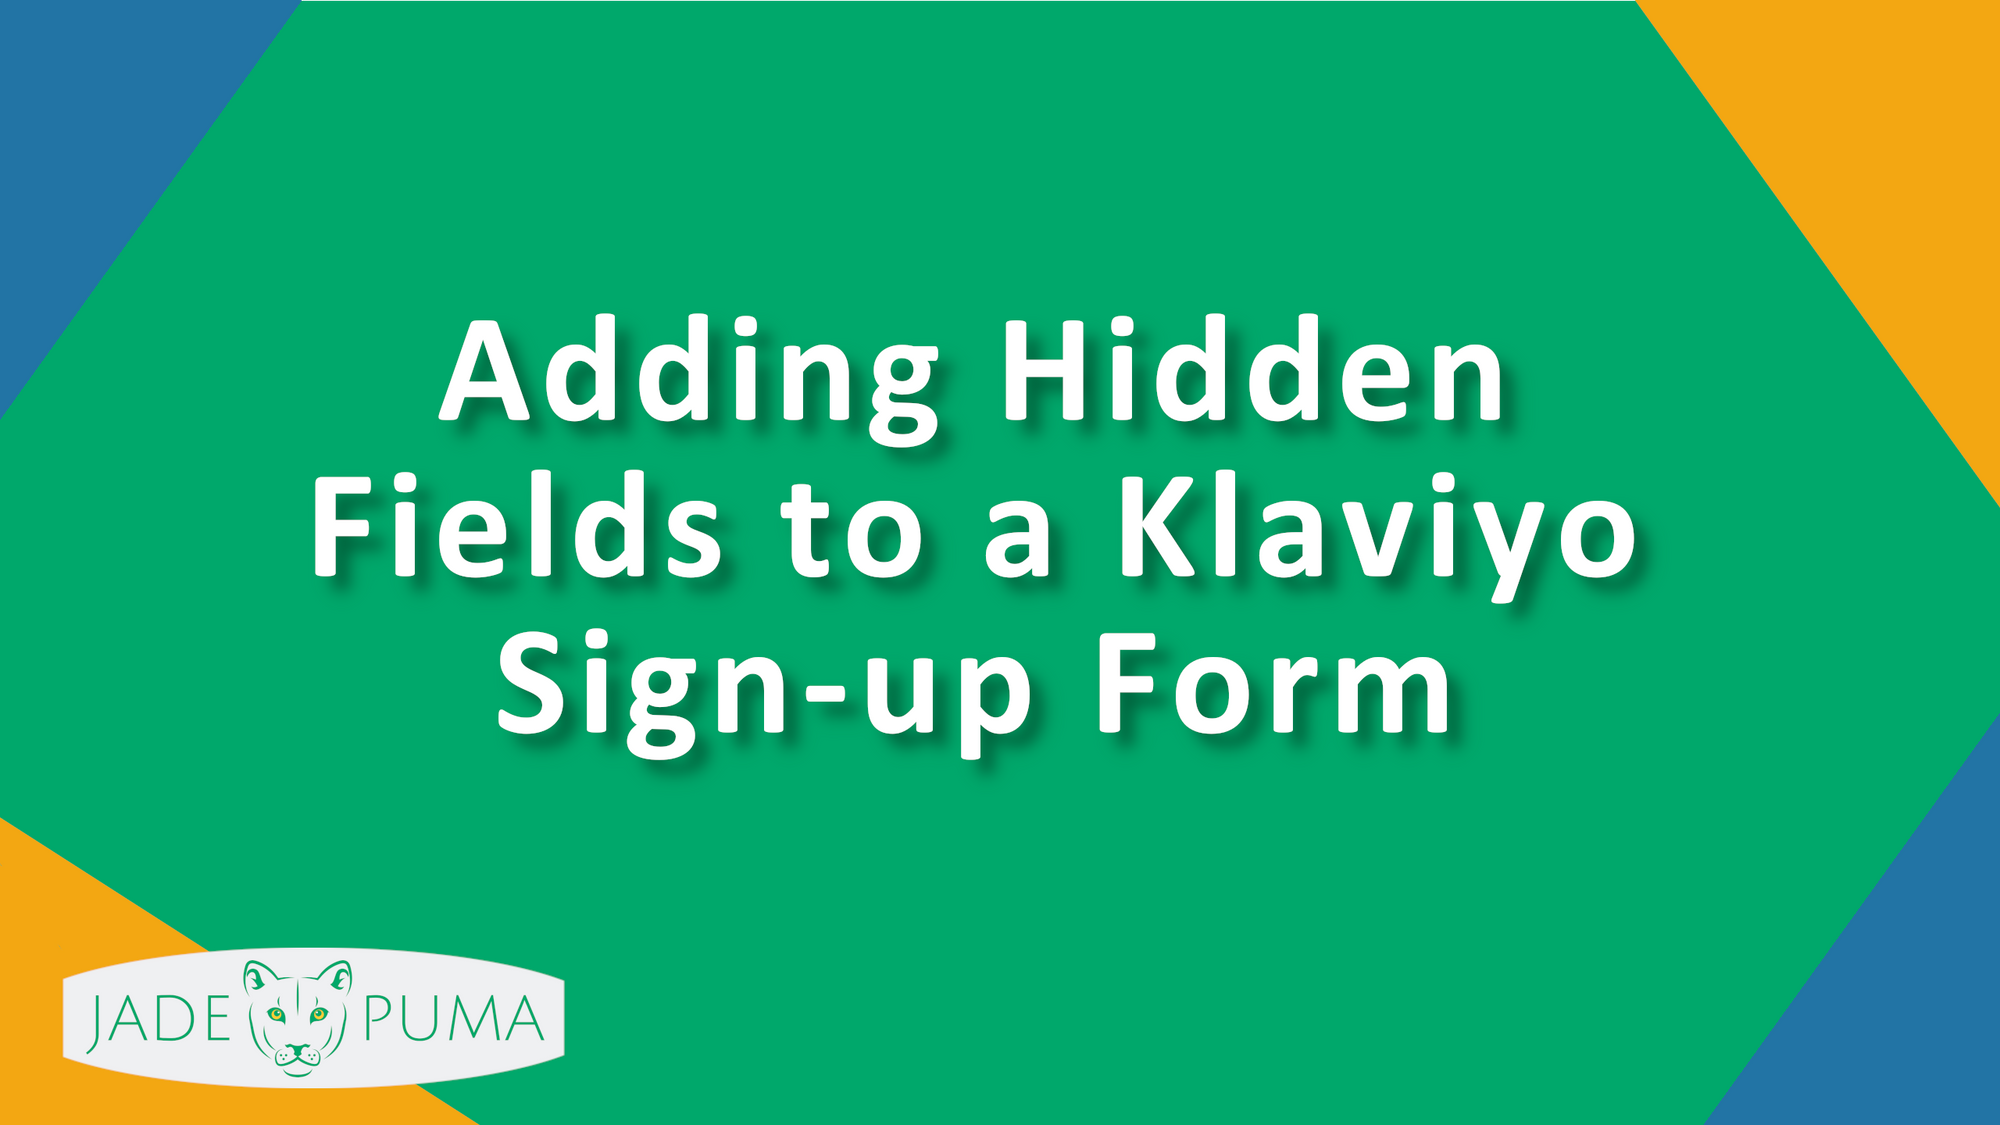 Adding Hidden Fields to a Klaviyo Sign-up Form